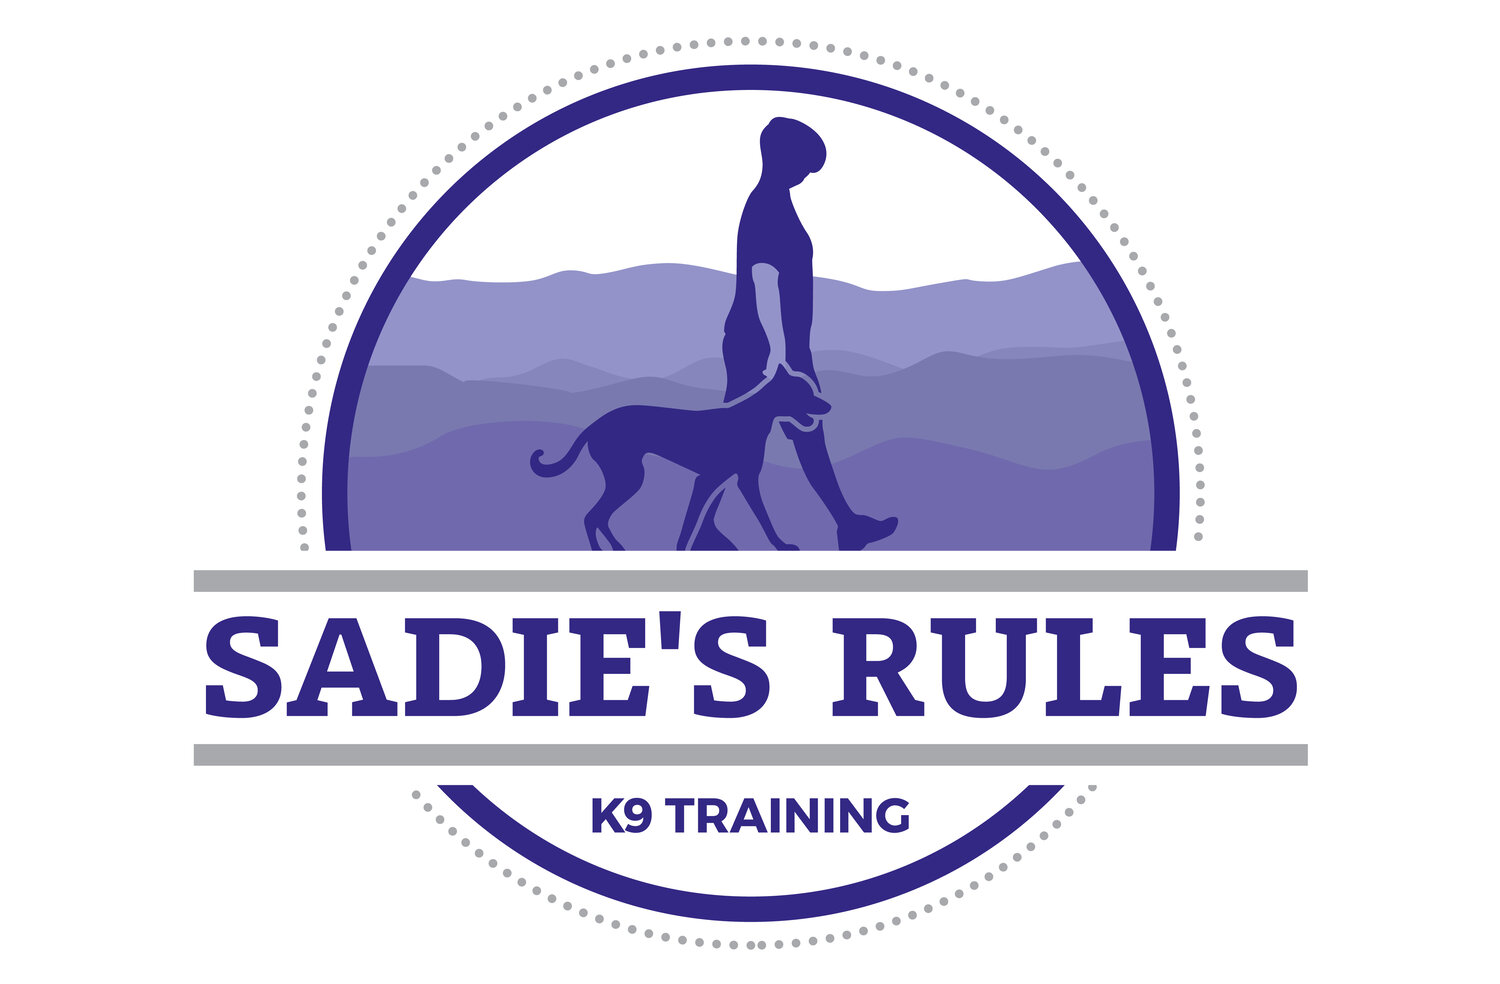 Sadie's Rules K9 Training